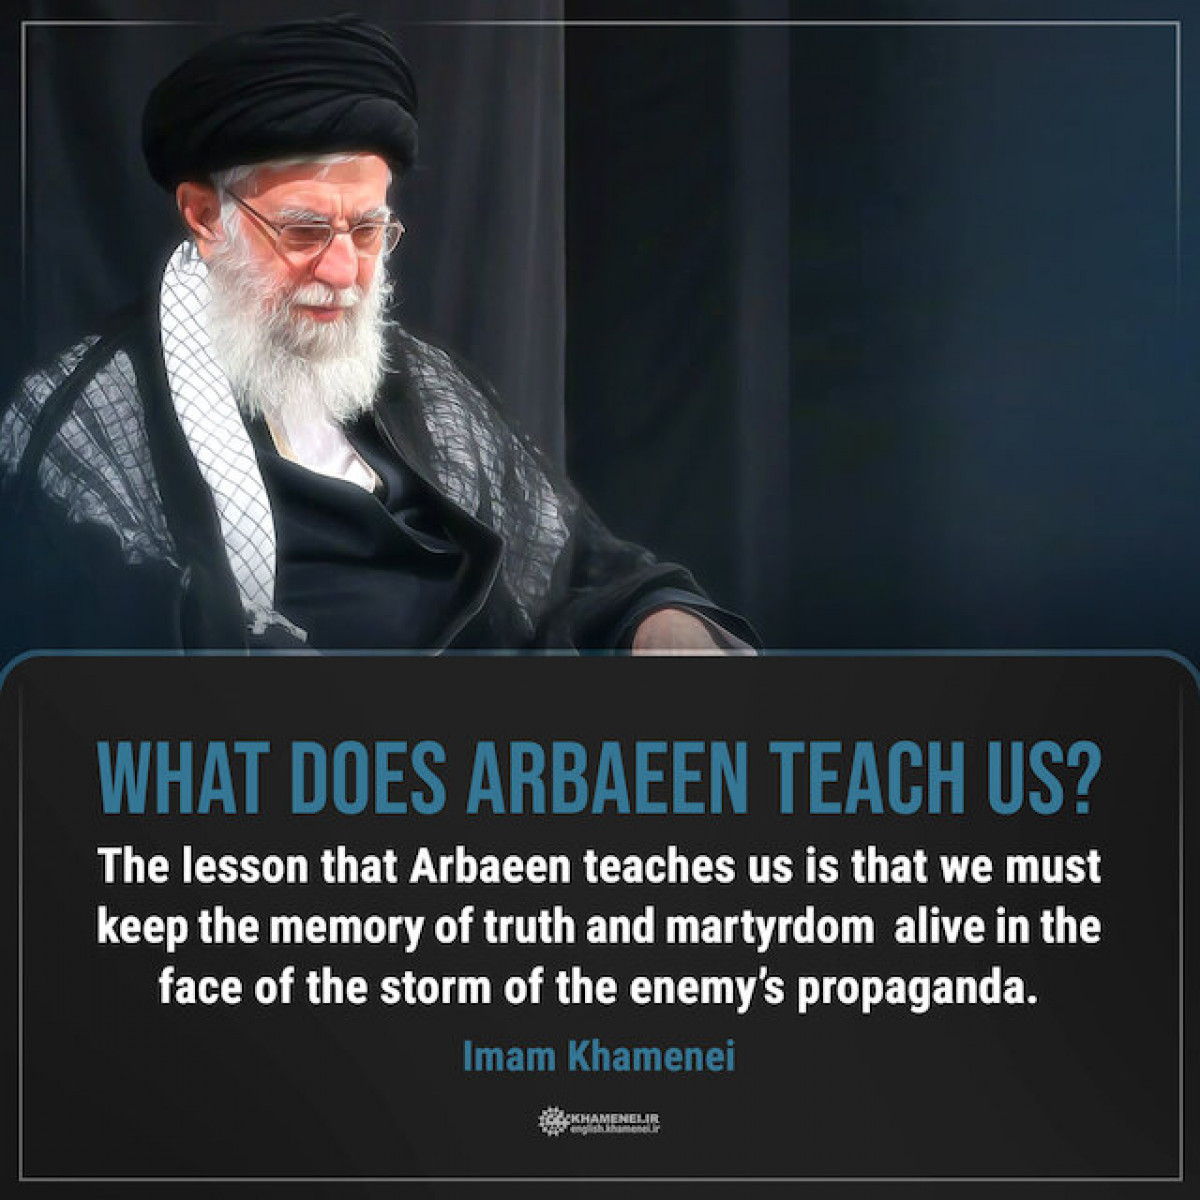 What does Arbaeen teach us?